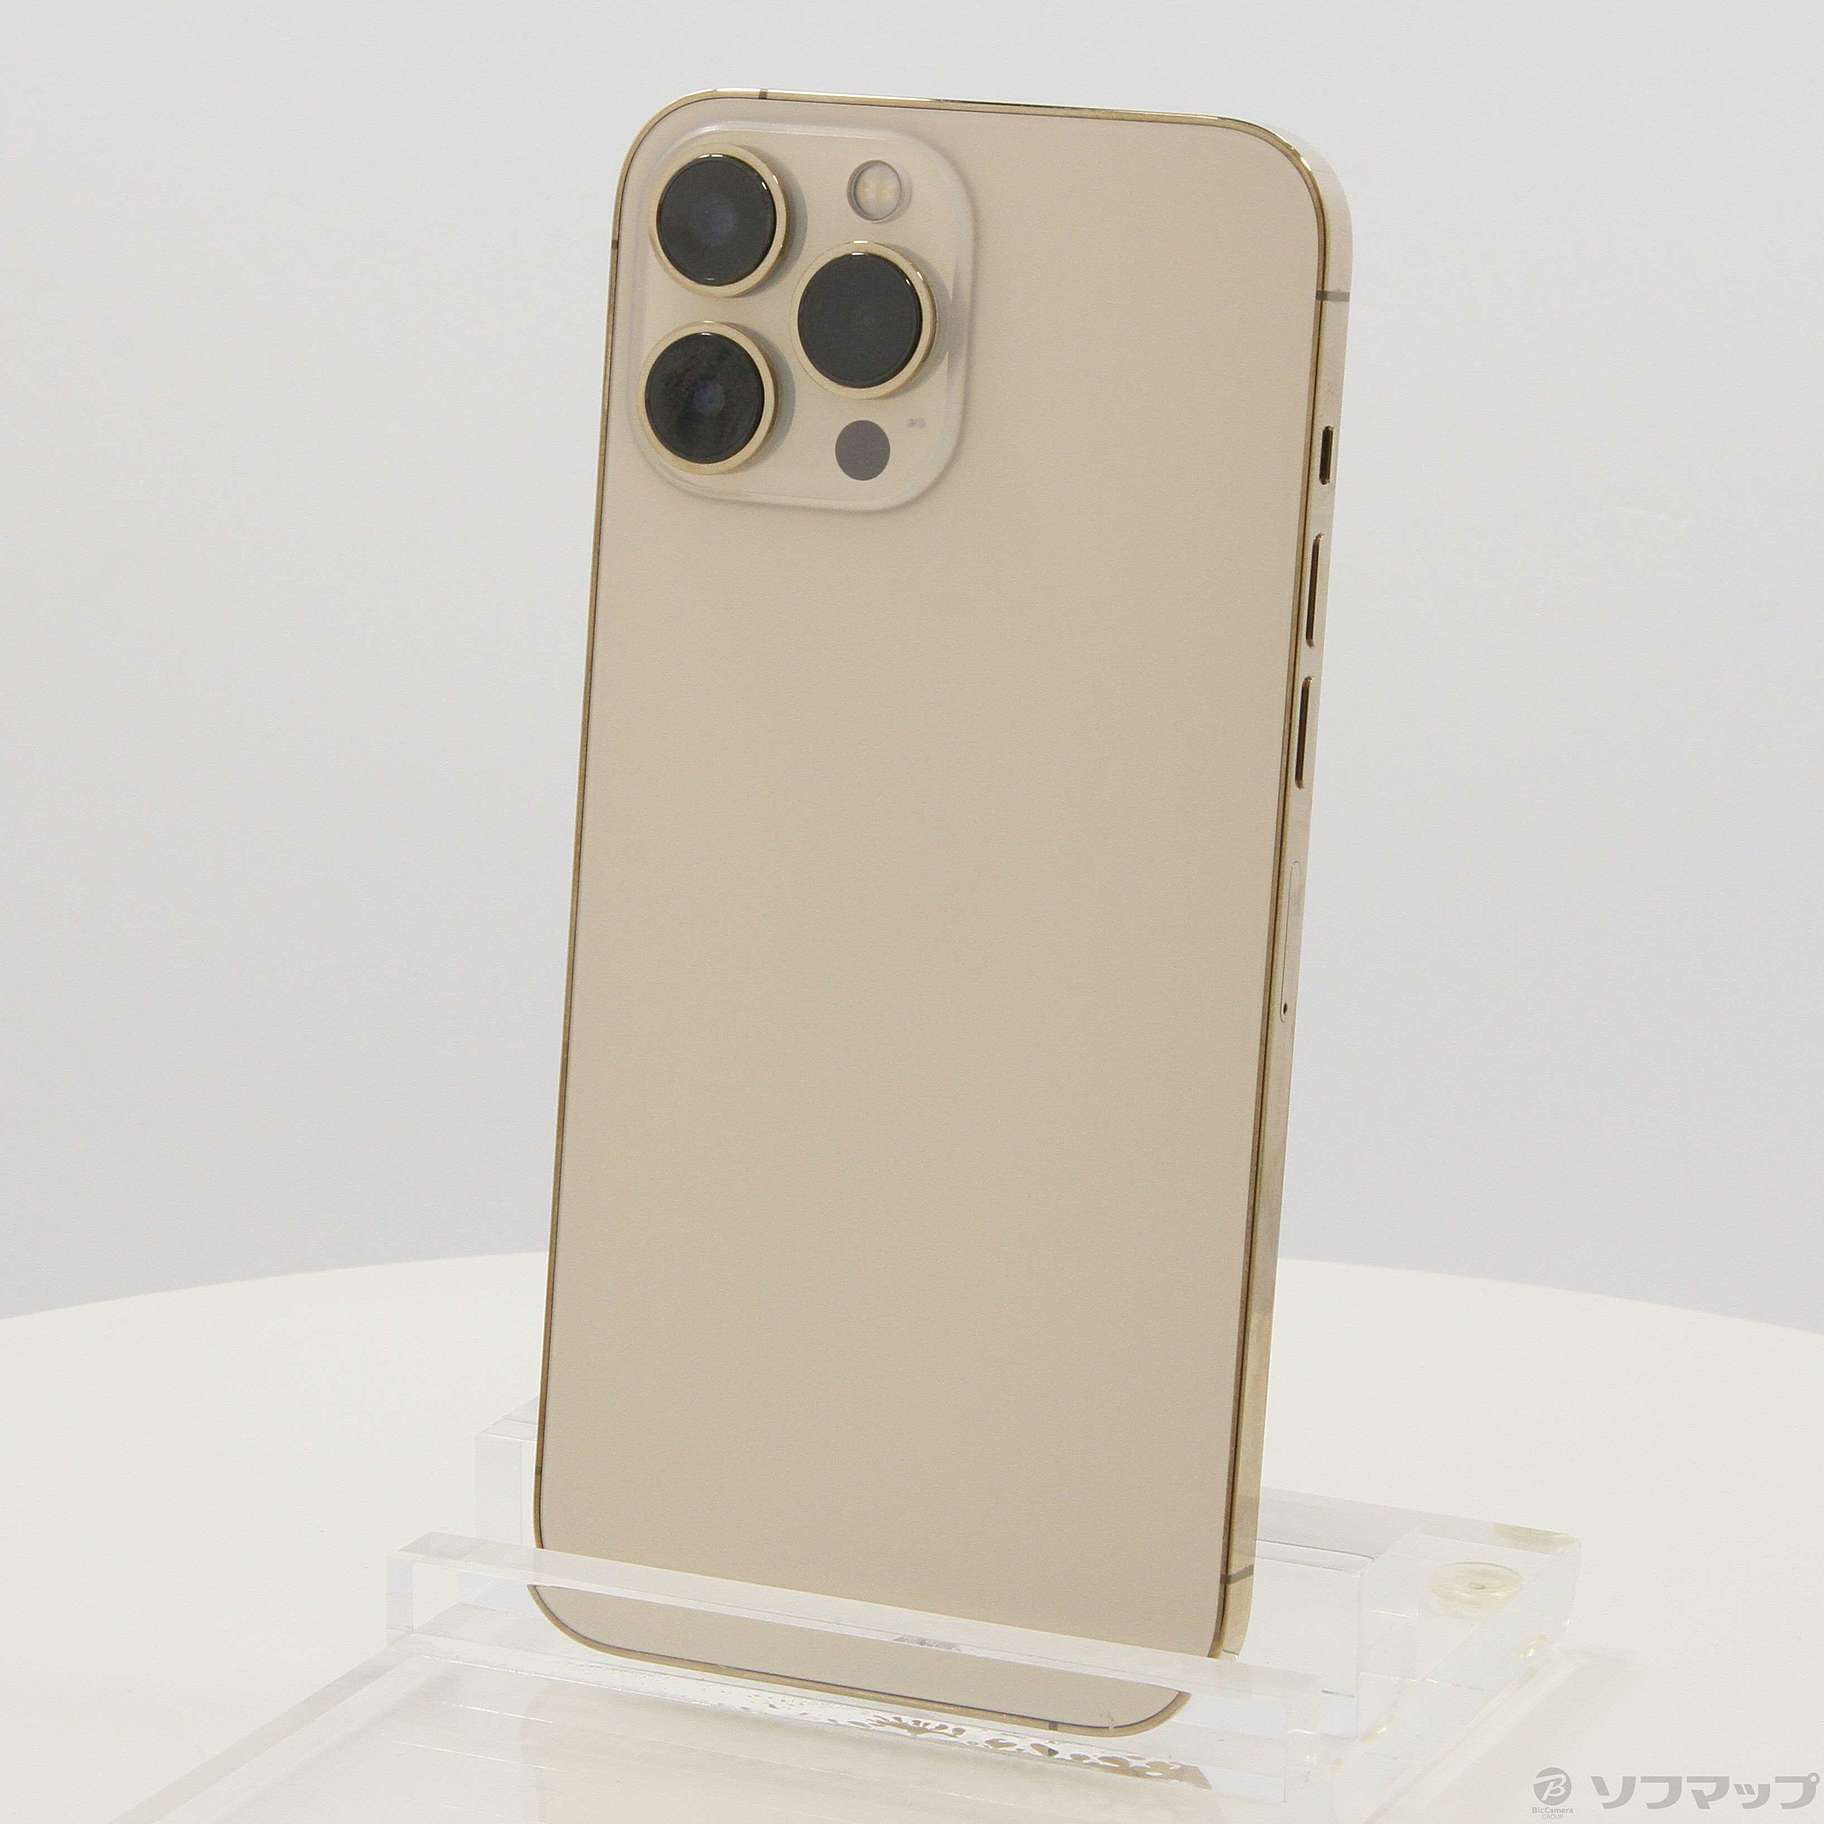 iPhone13 Pro Max 256GB SIMフリー ゴールド - 携帯電話本体